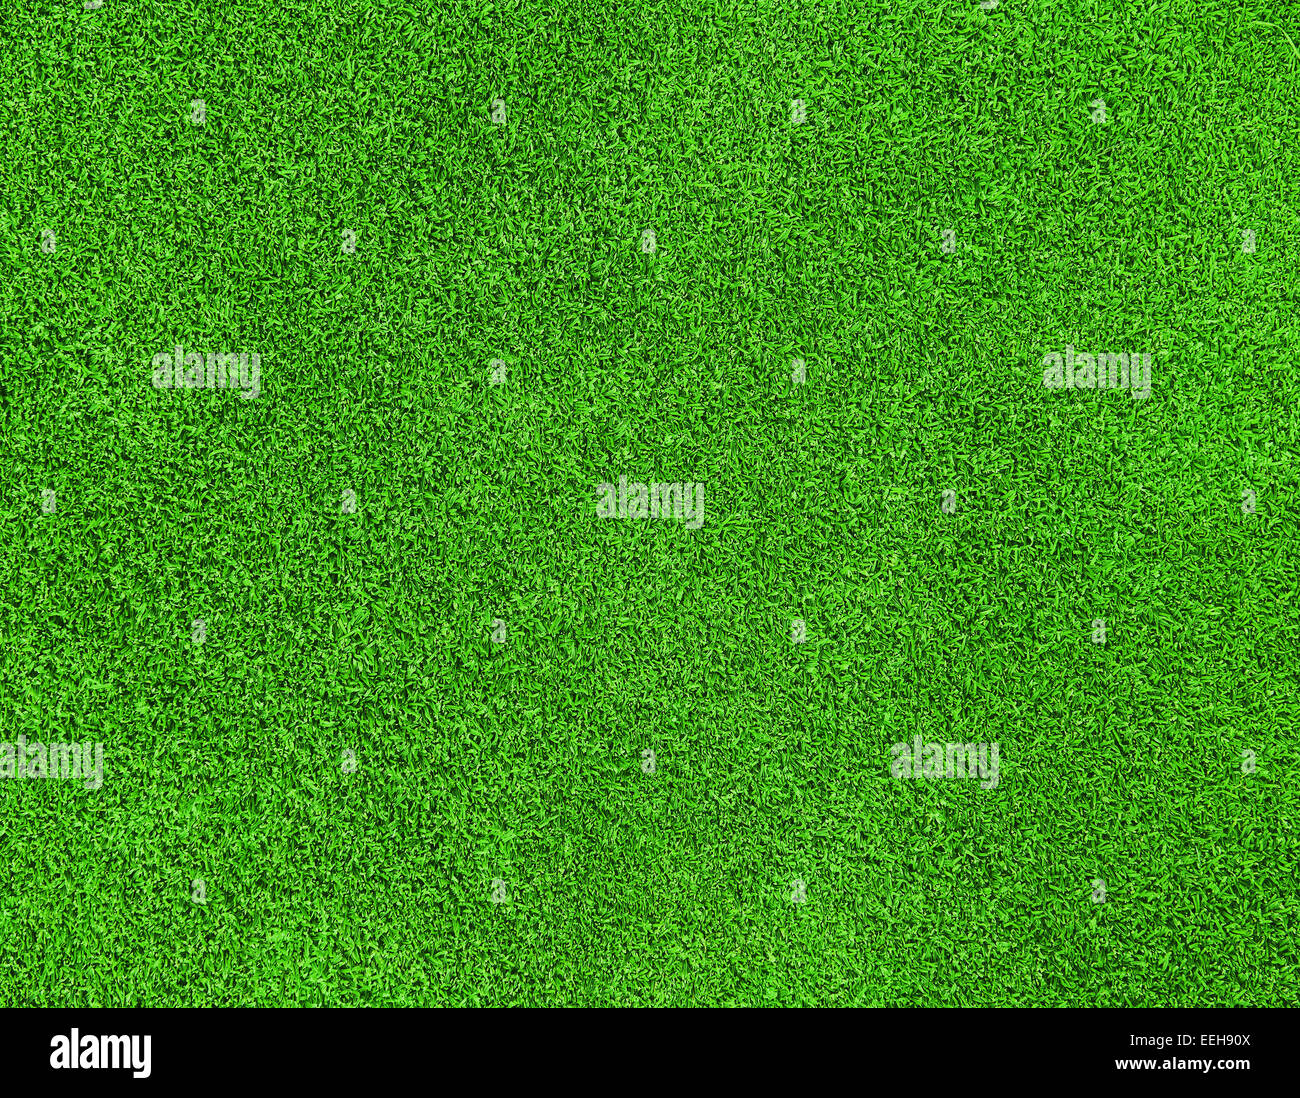 beautiful green grass texture on golf course Stock Photo - Alamy